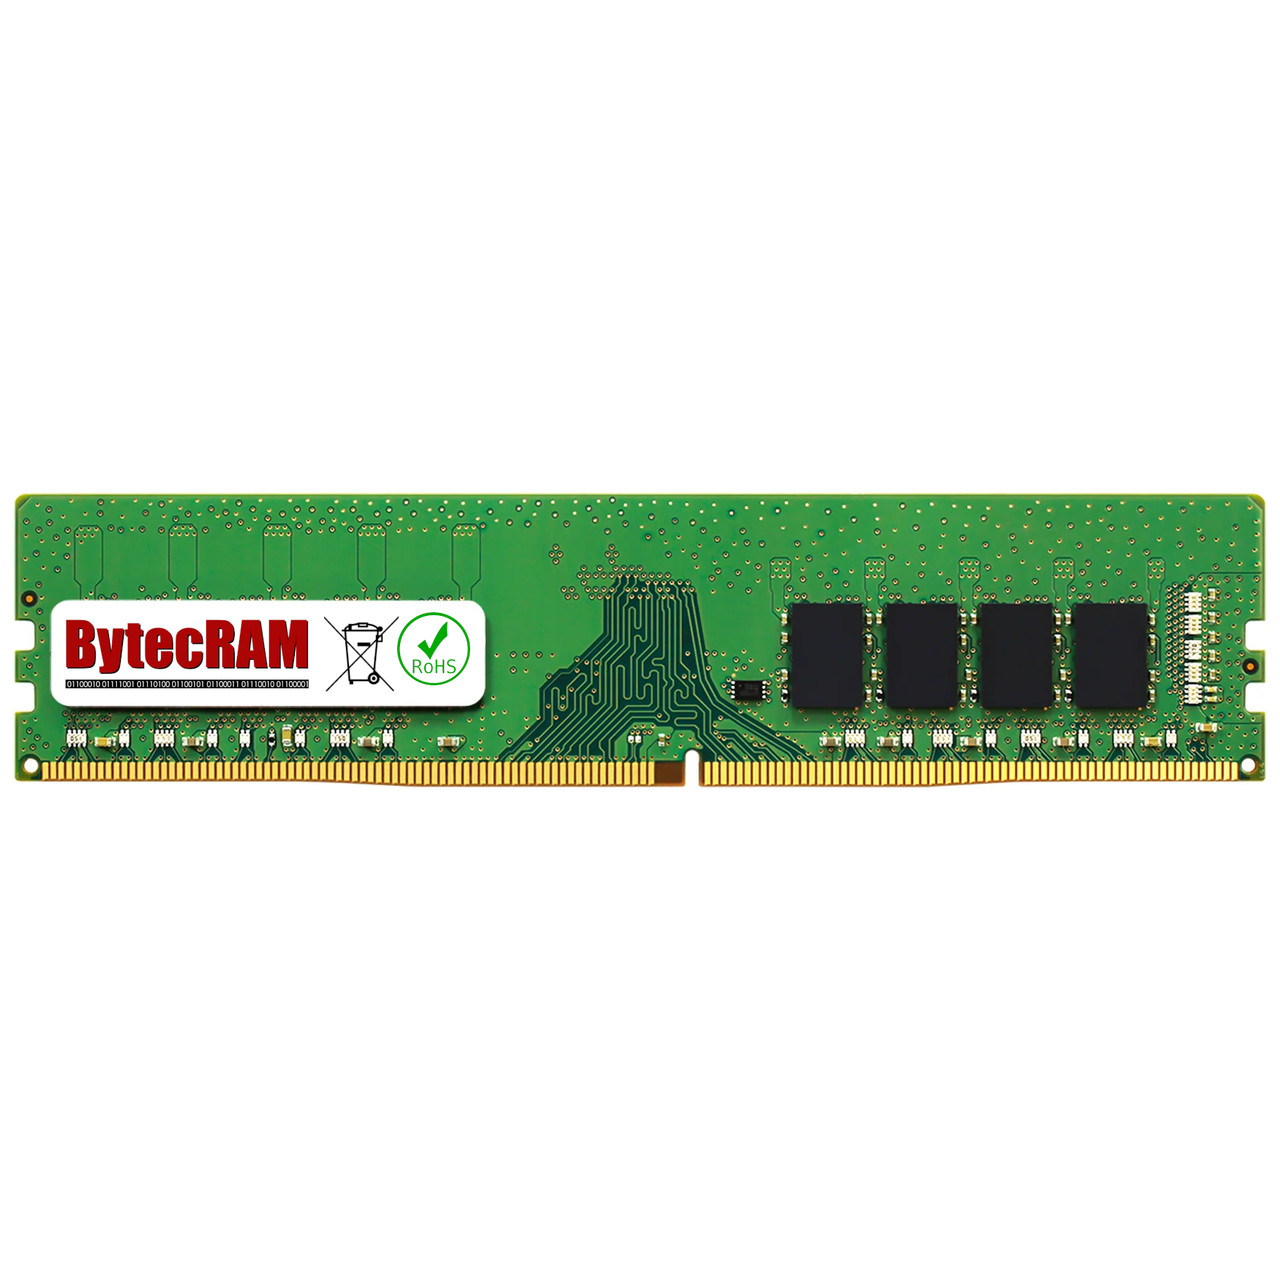 eBay*16GB HP Slim S01-aF0008na DDR4 3200MHz UDIMM Memory RAM Upgrade